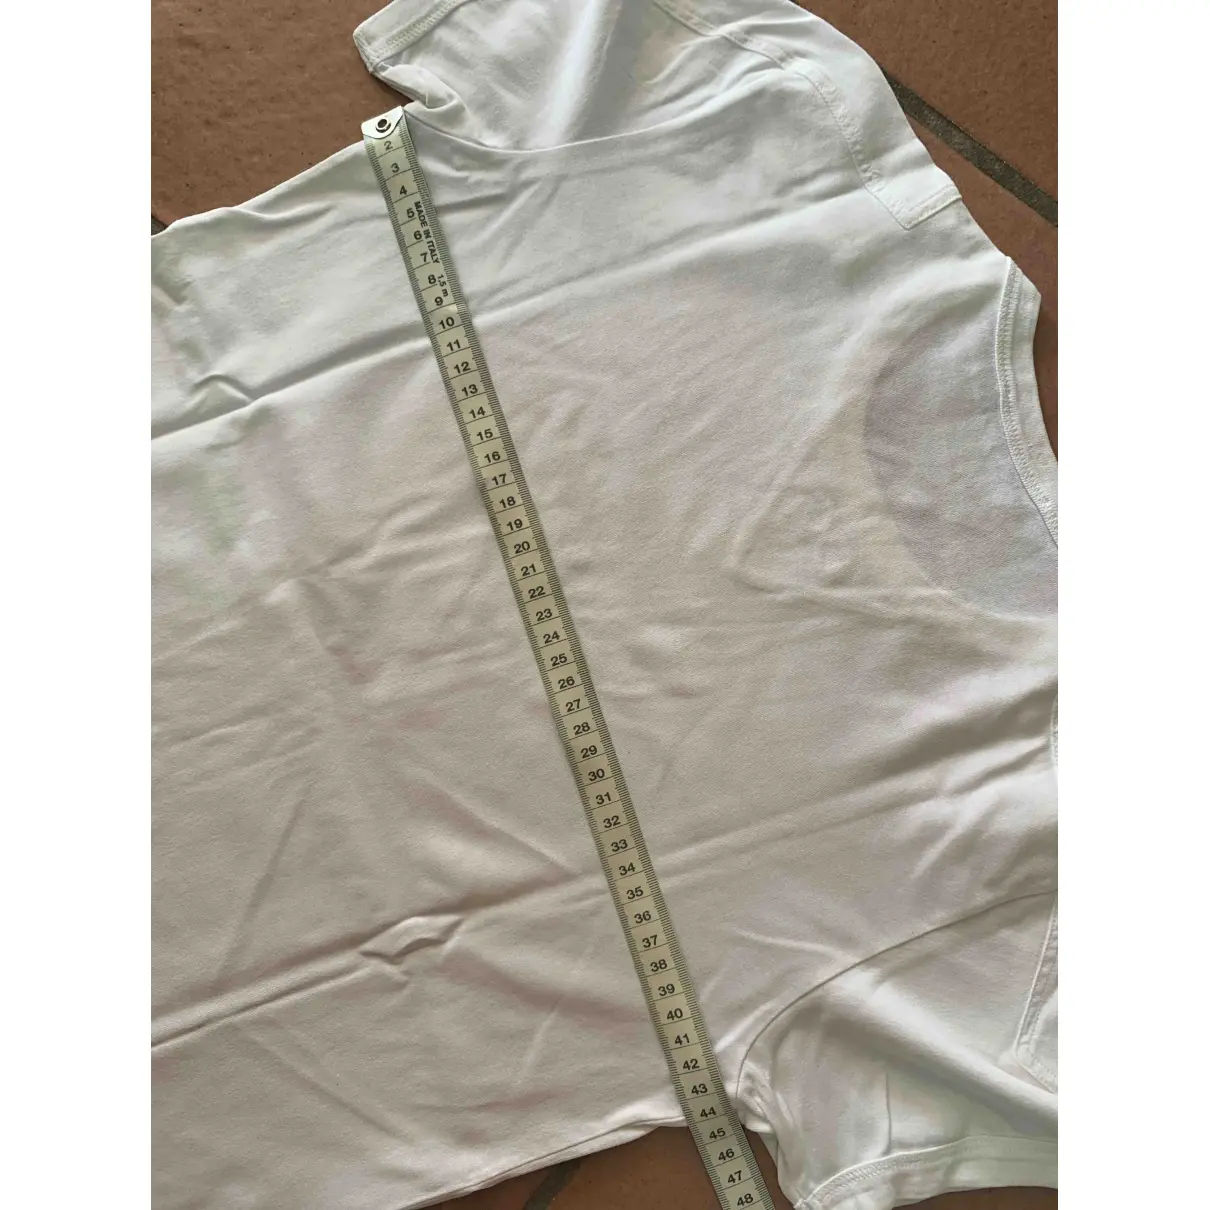 White Cotton T-shirt Dolce & Gabbana